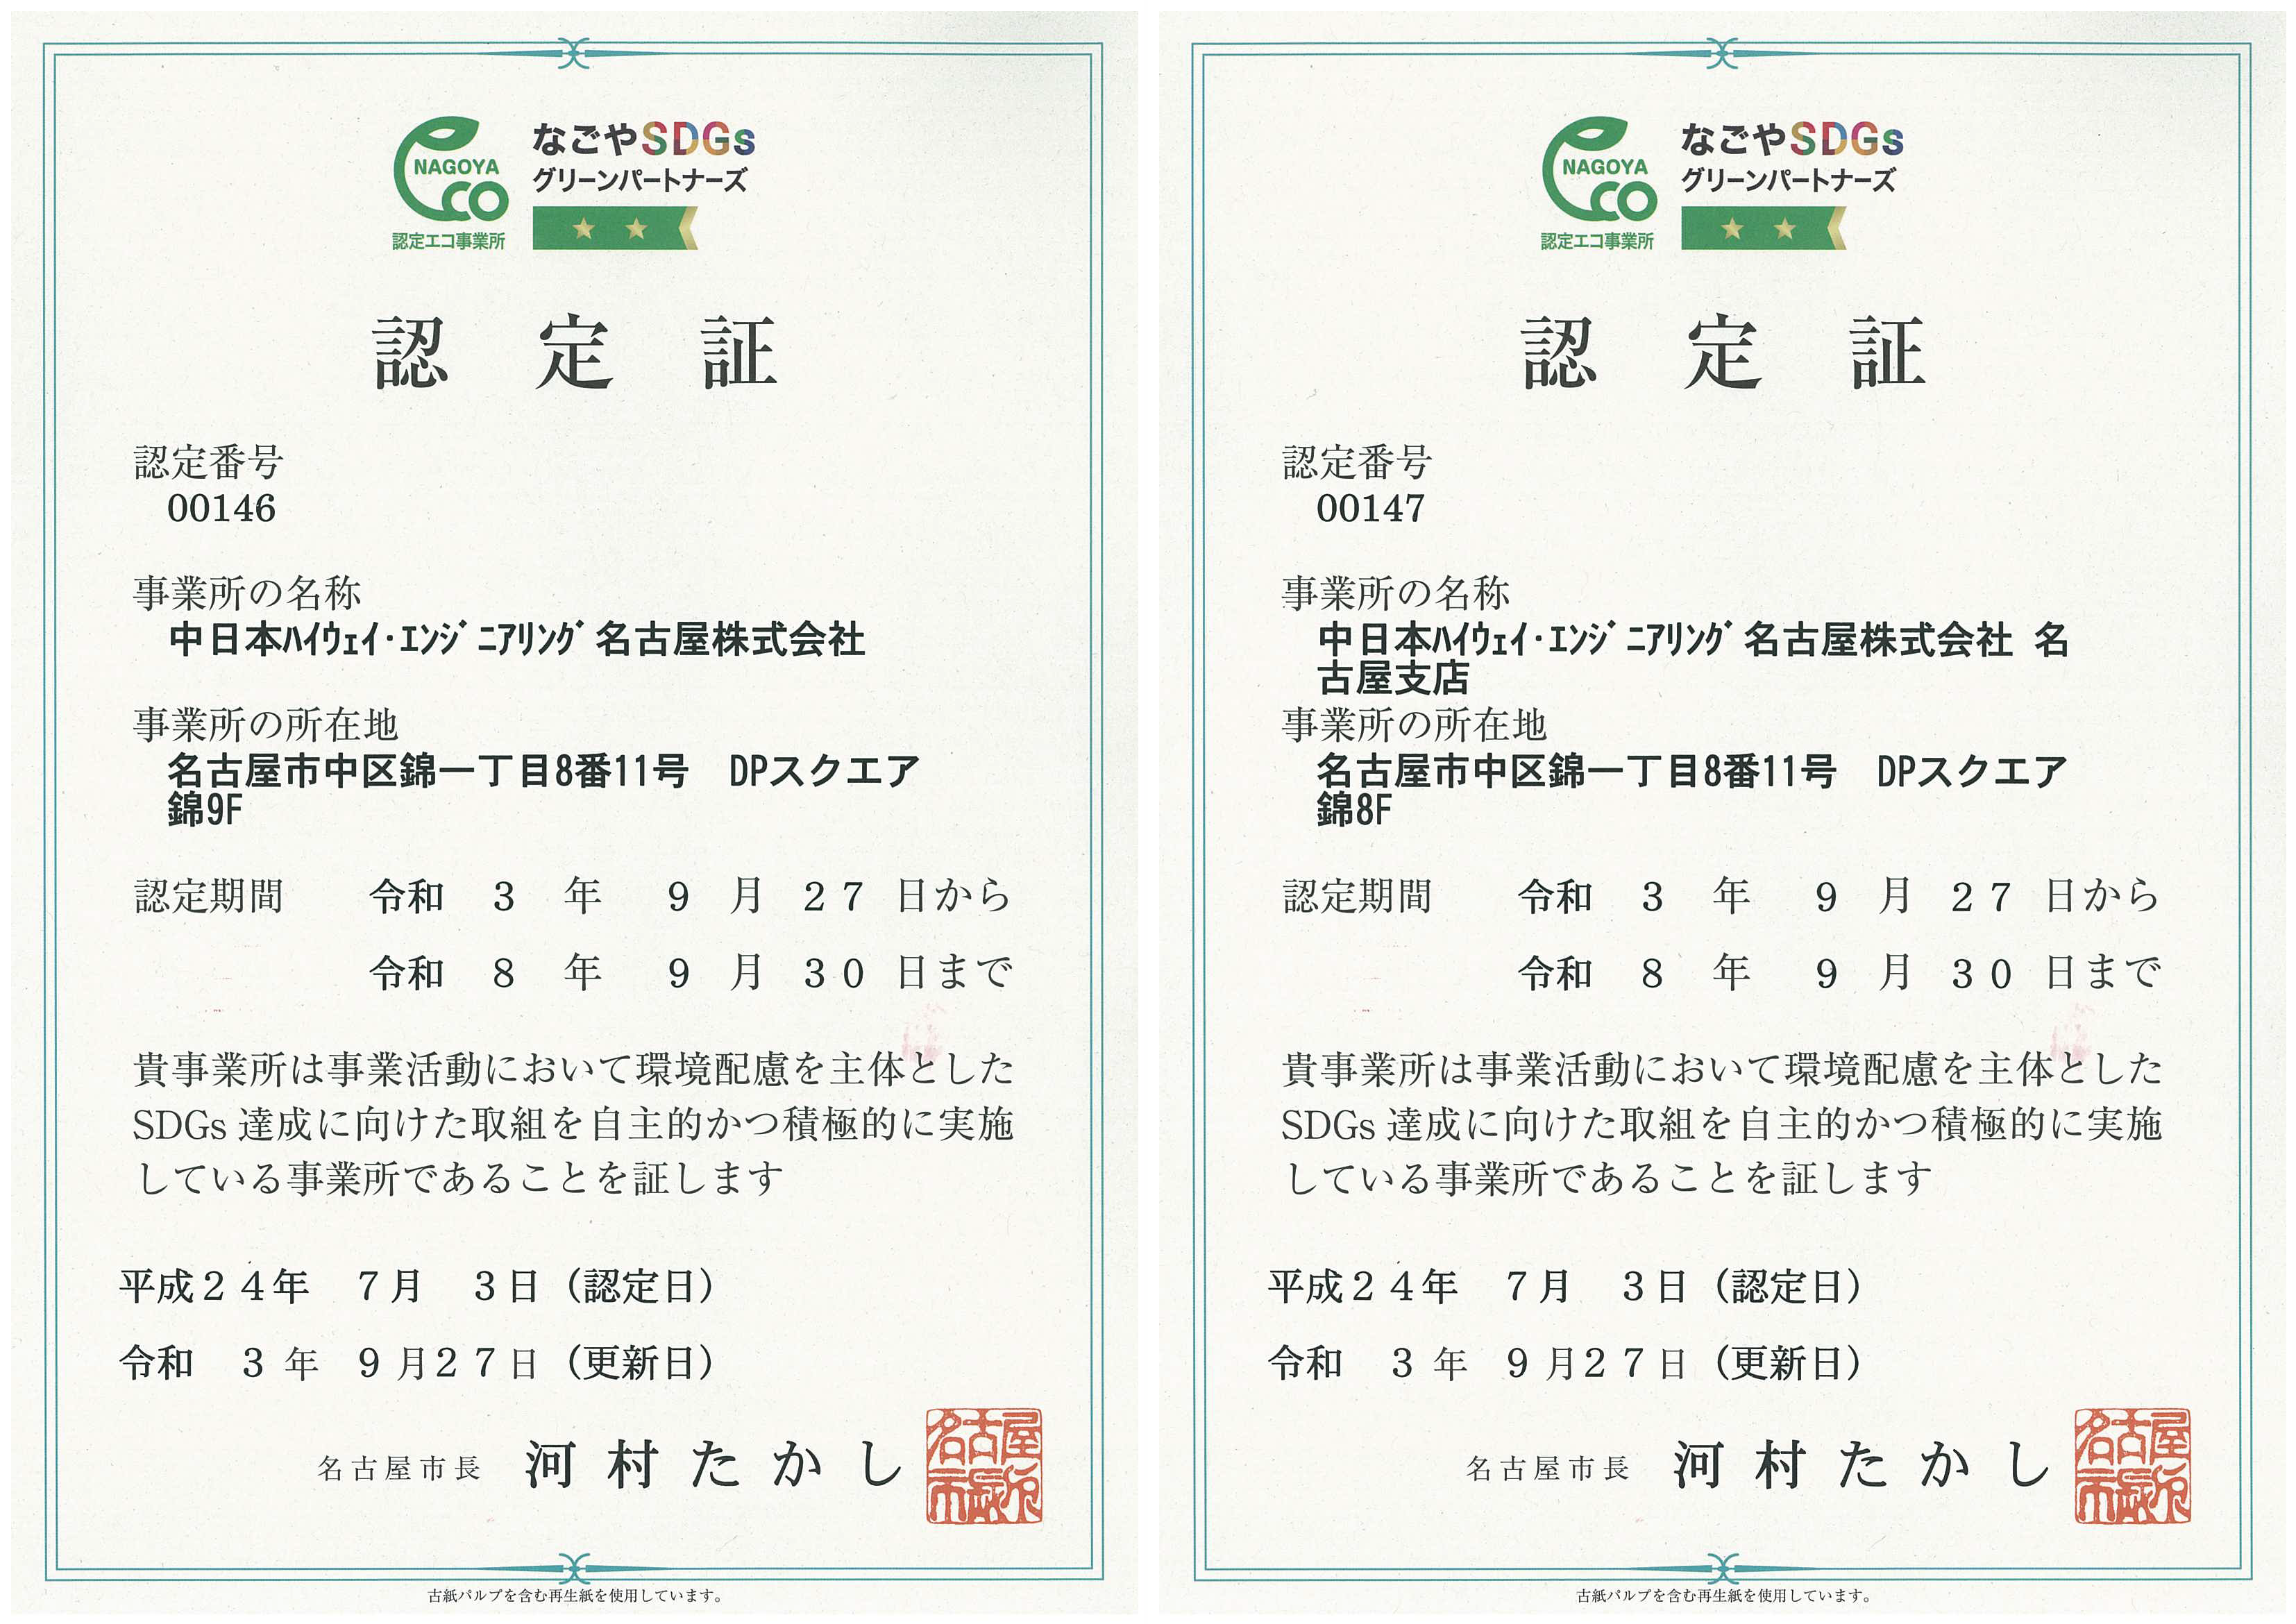 Nagoya SDGs Green Partners Certification (Nagoya City)